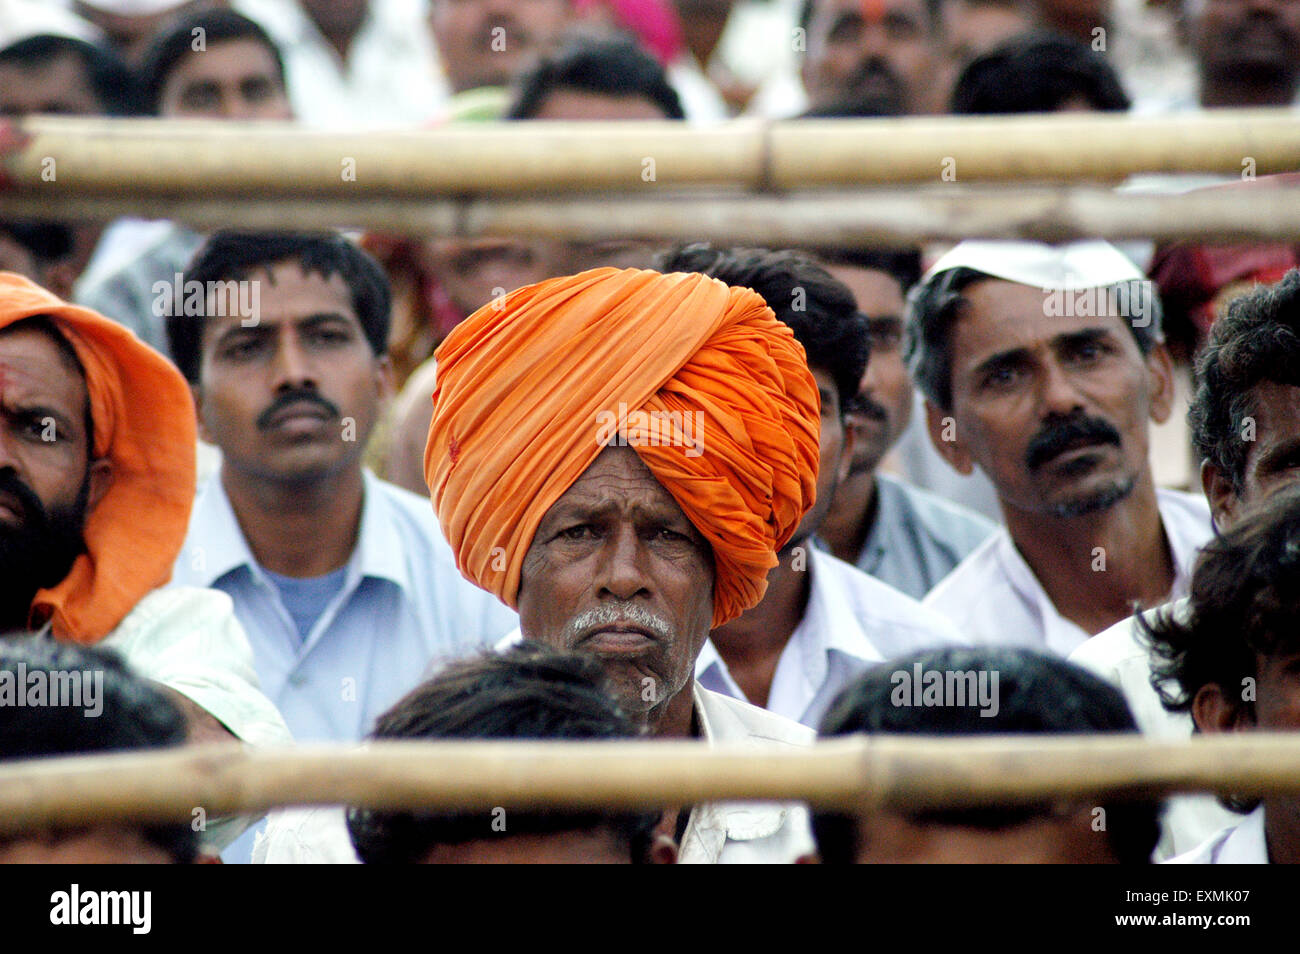 A villager wearing a saffron colored turban attends a election public rally addressed by BJP leader Pramod Mahajan Ahmednagar Maharashtra India Stock Photo